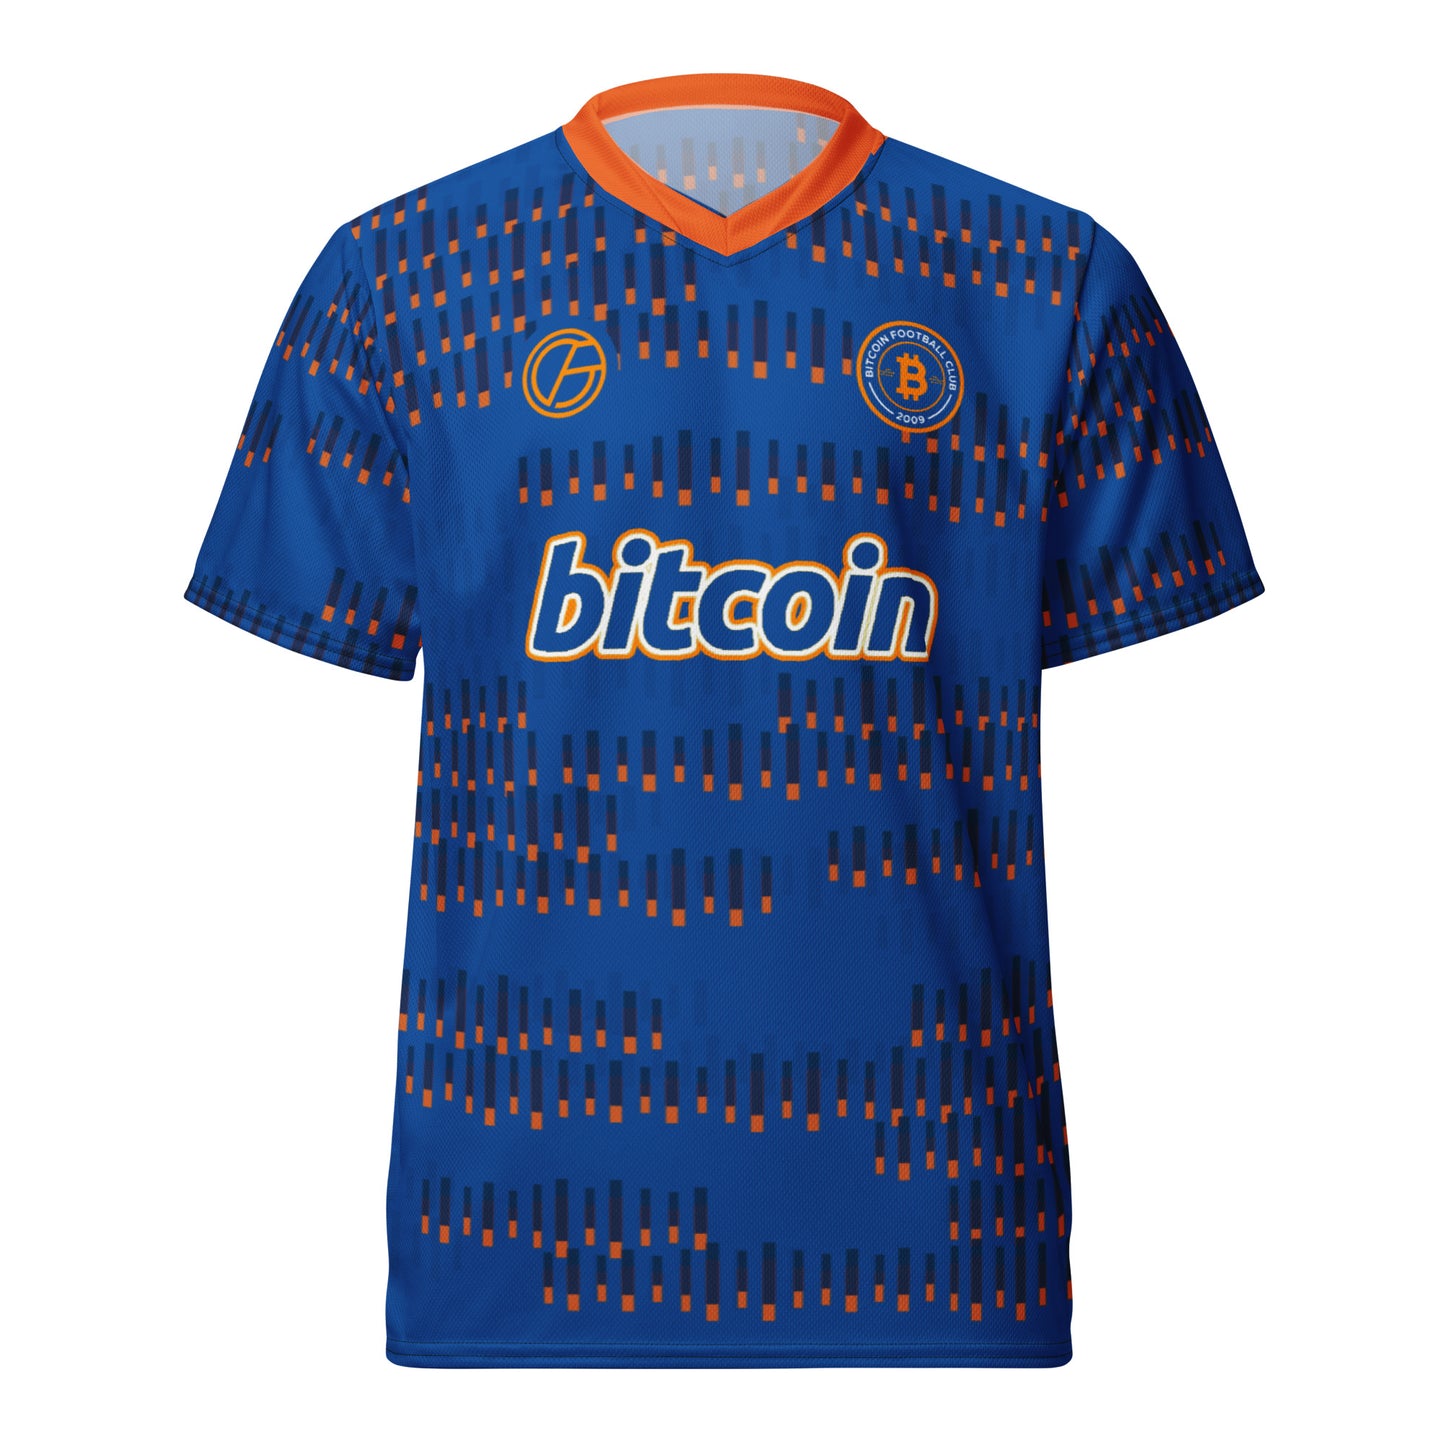 Bitcoin FC 23/24 Blue Jersey